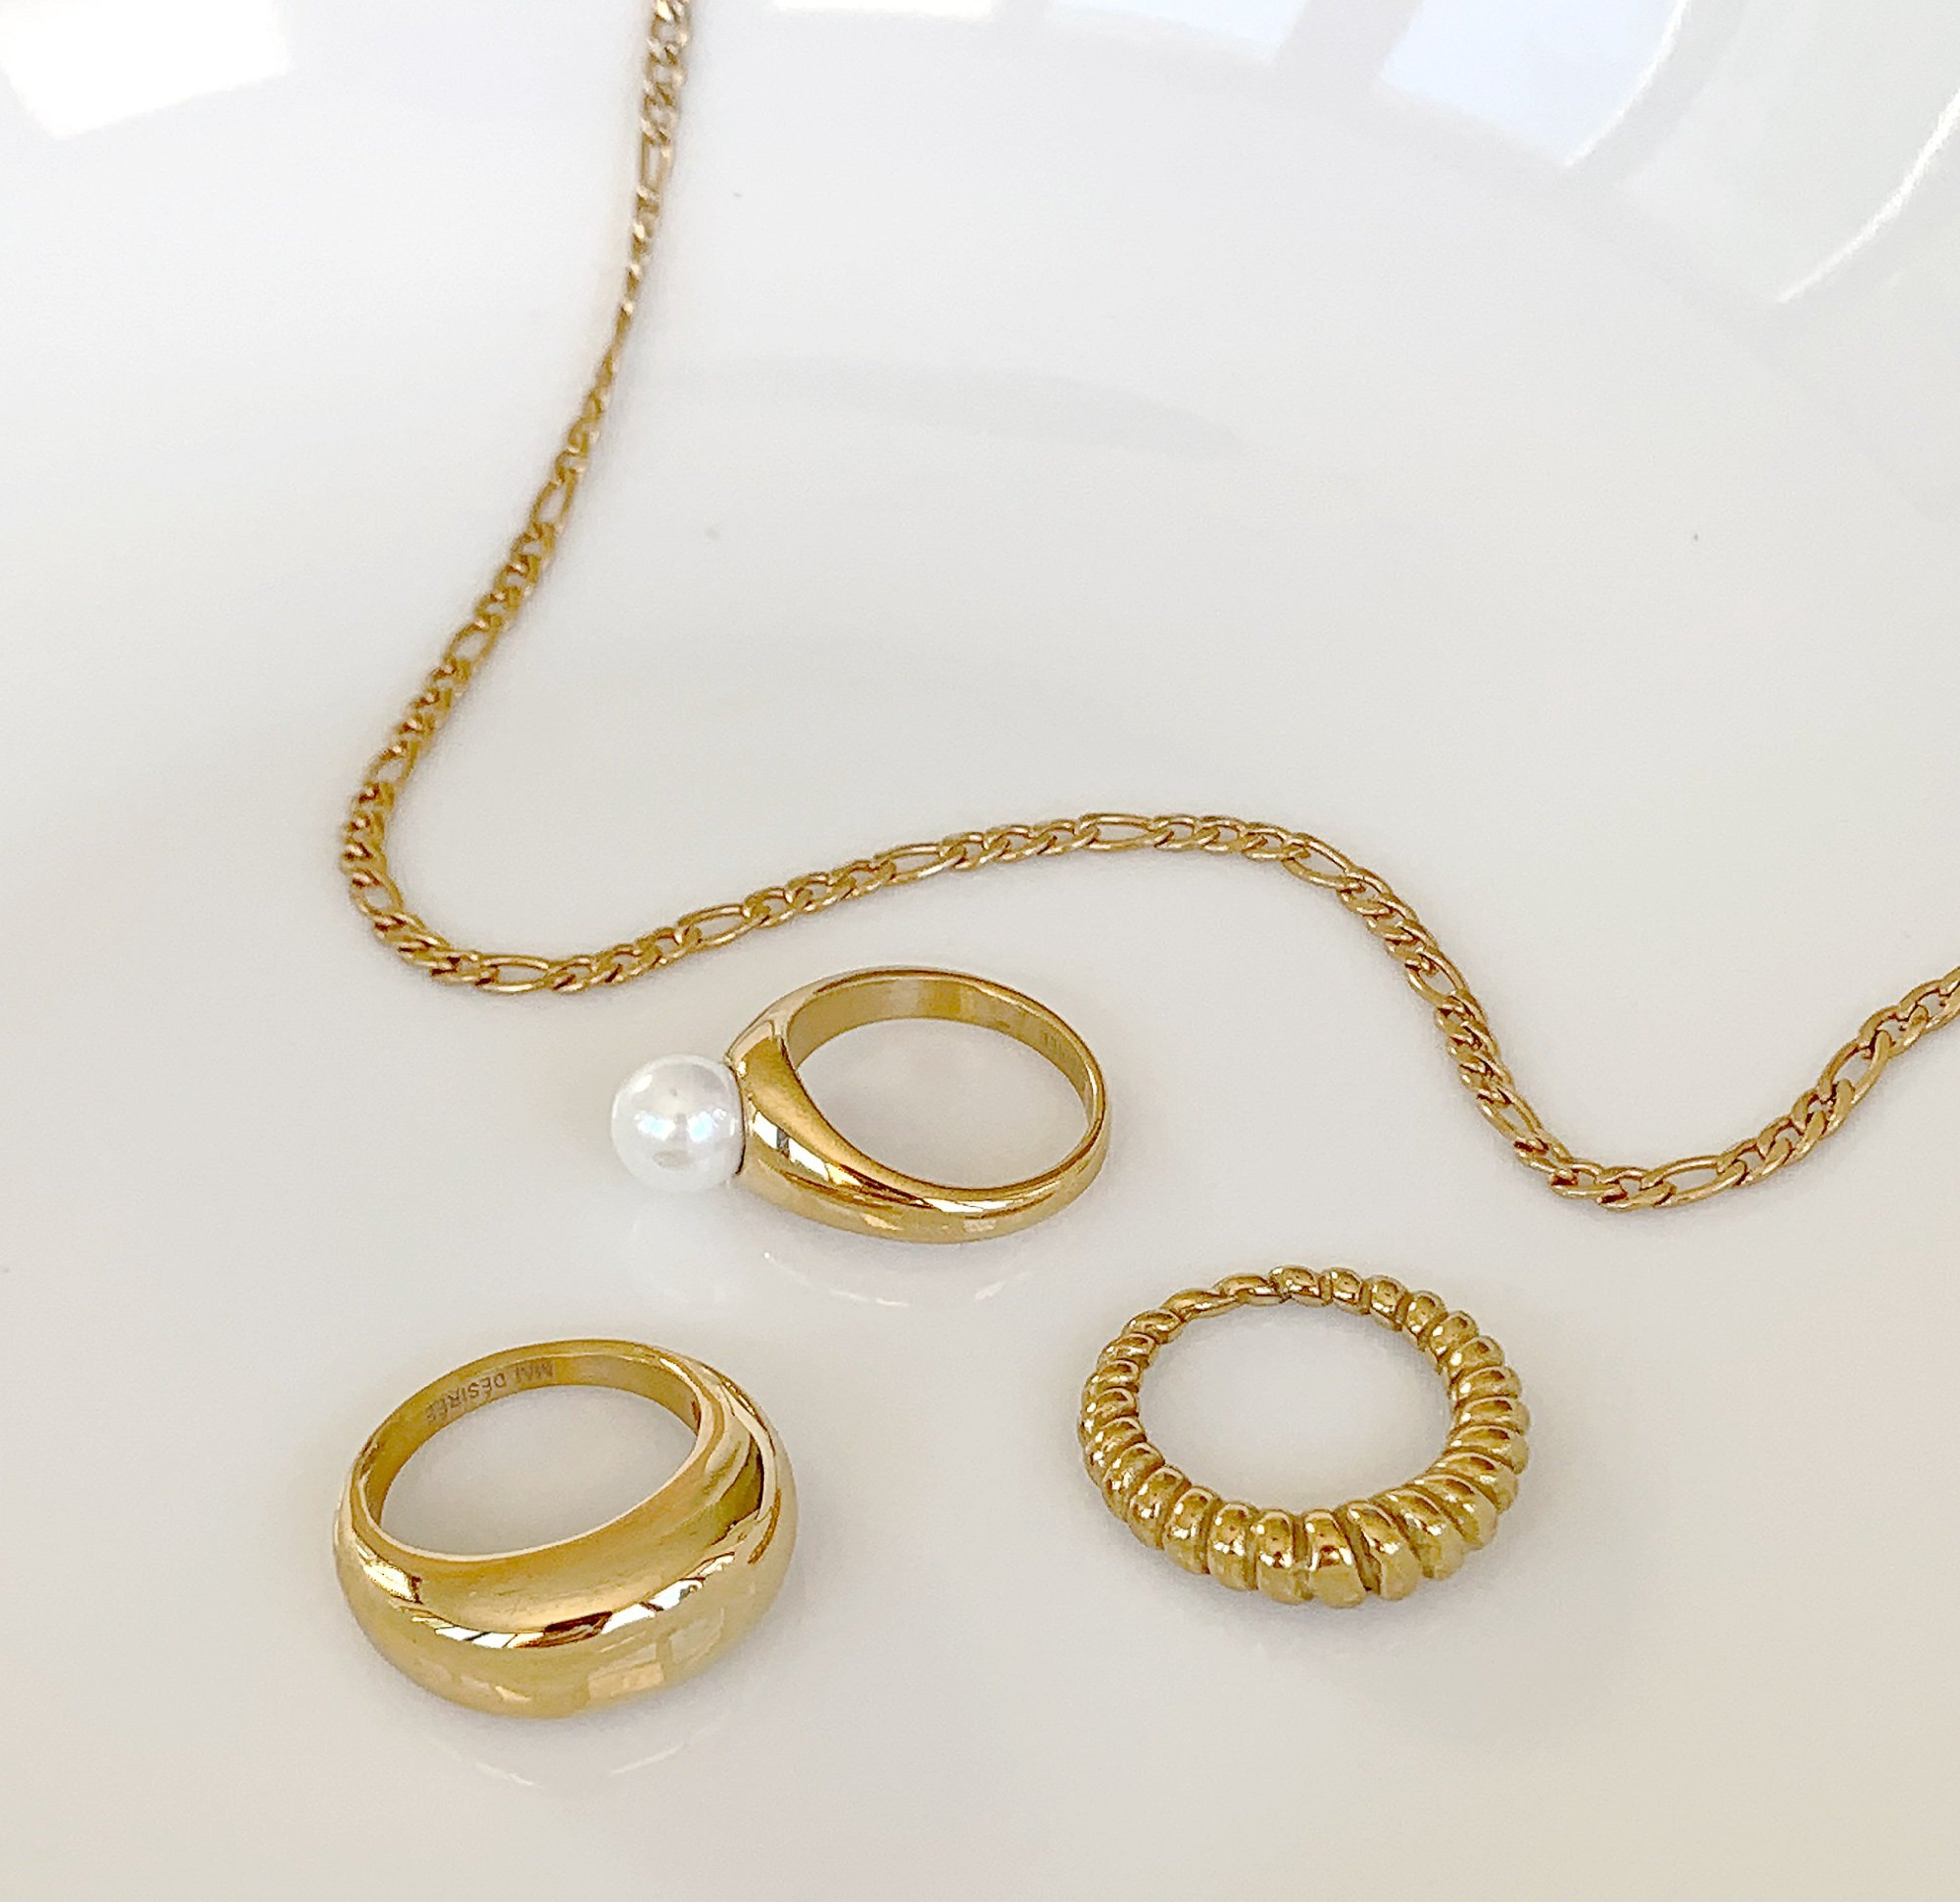 gold dainty jewelry wwaterproof